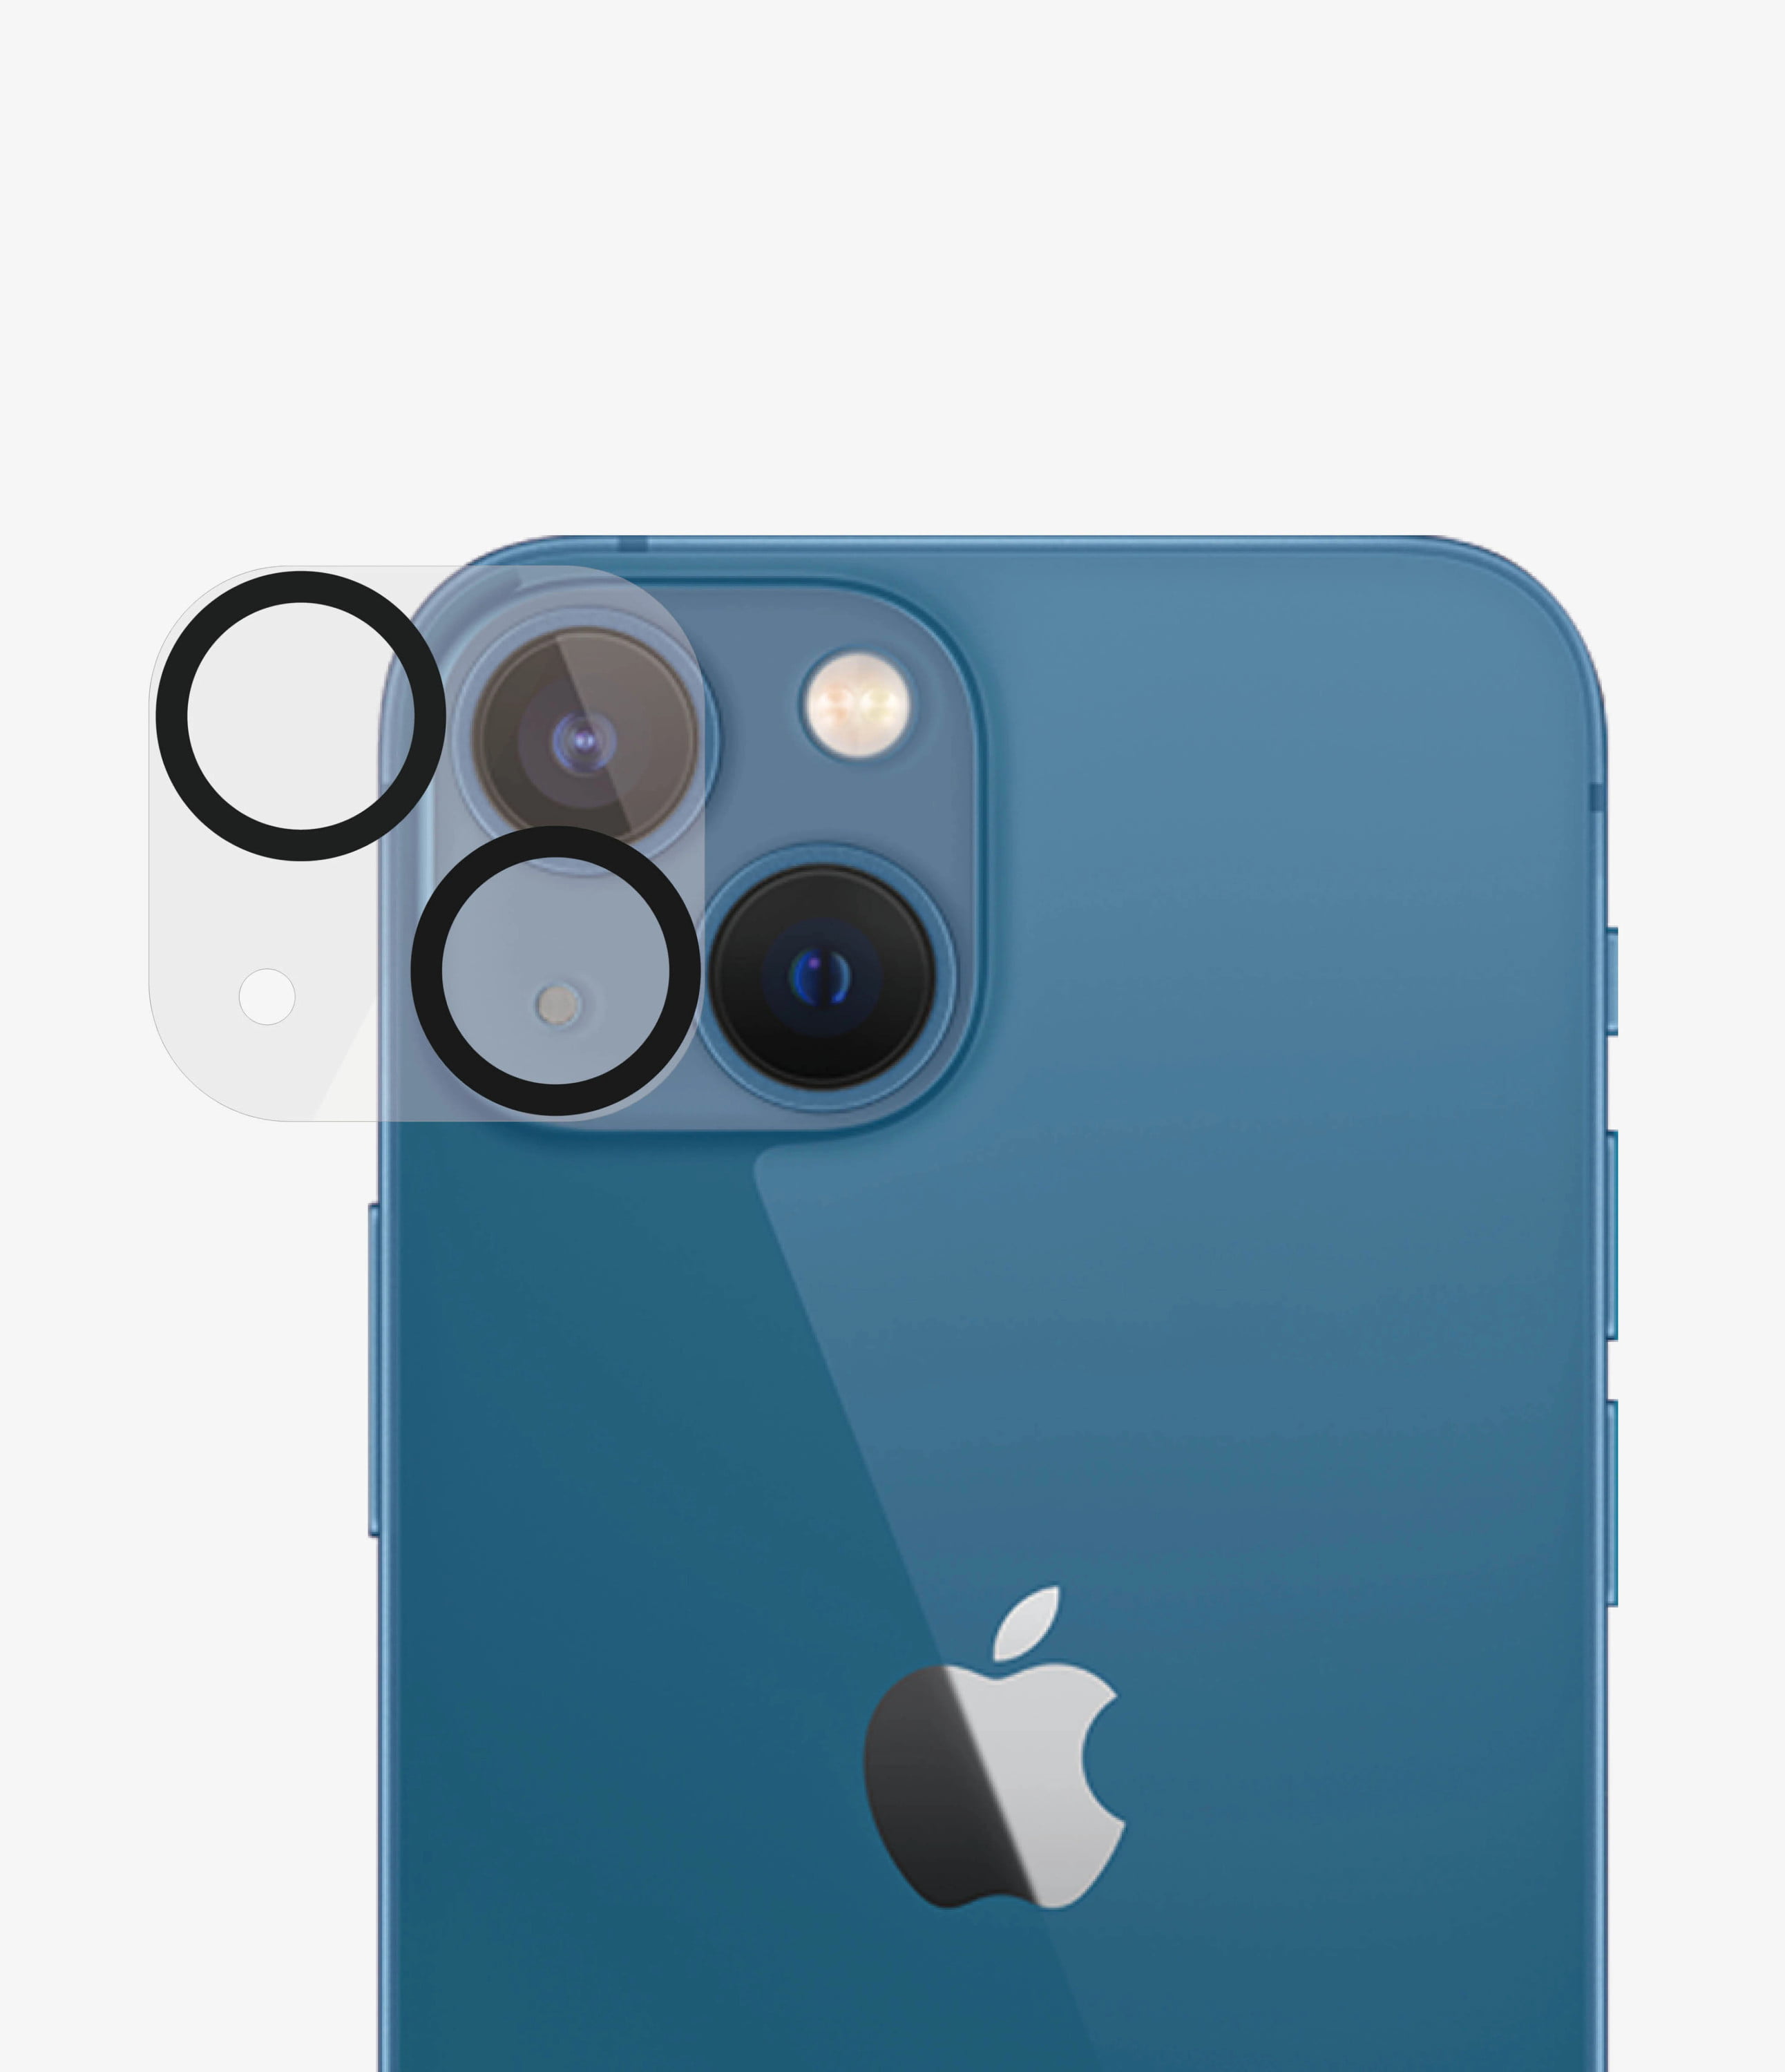 PanzerGlass® PicturePerfect Camera Lens Protector Apple iPhone 13 Pro –  PanzerGlass US